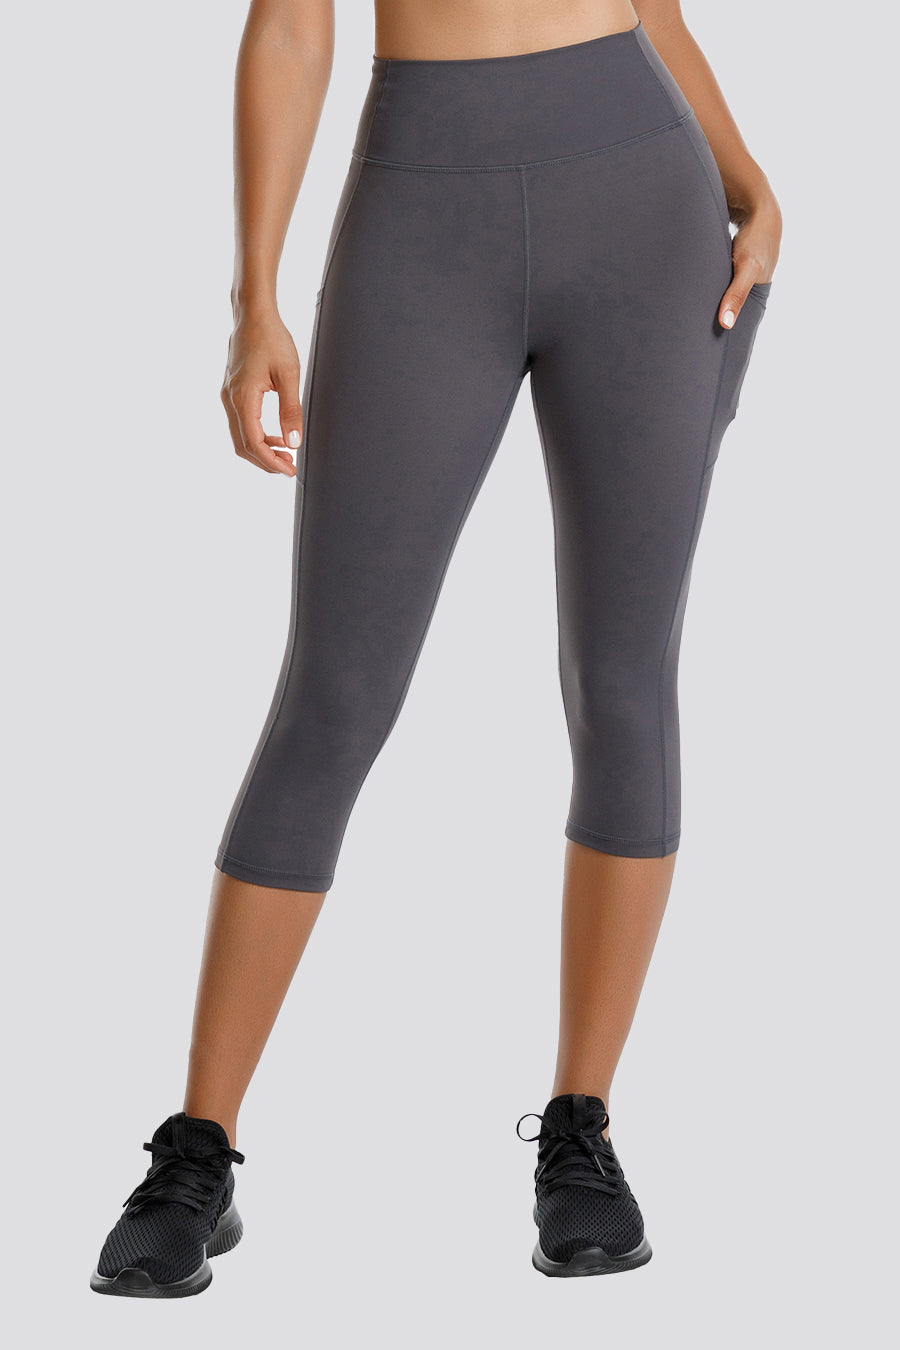 Women's Capri Leggings - Grey / XS